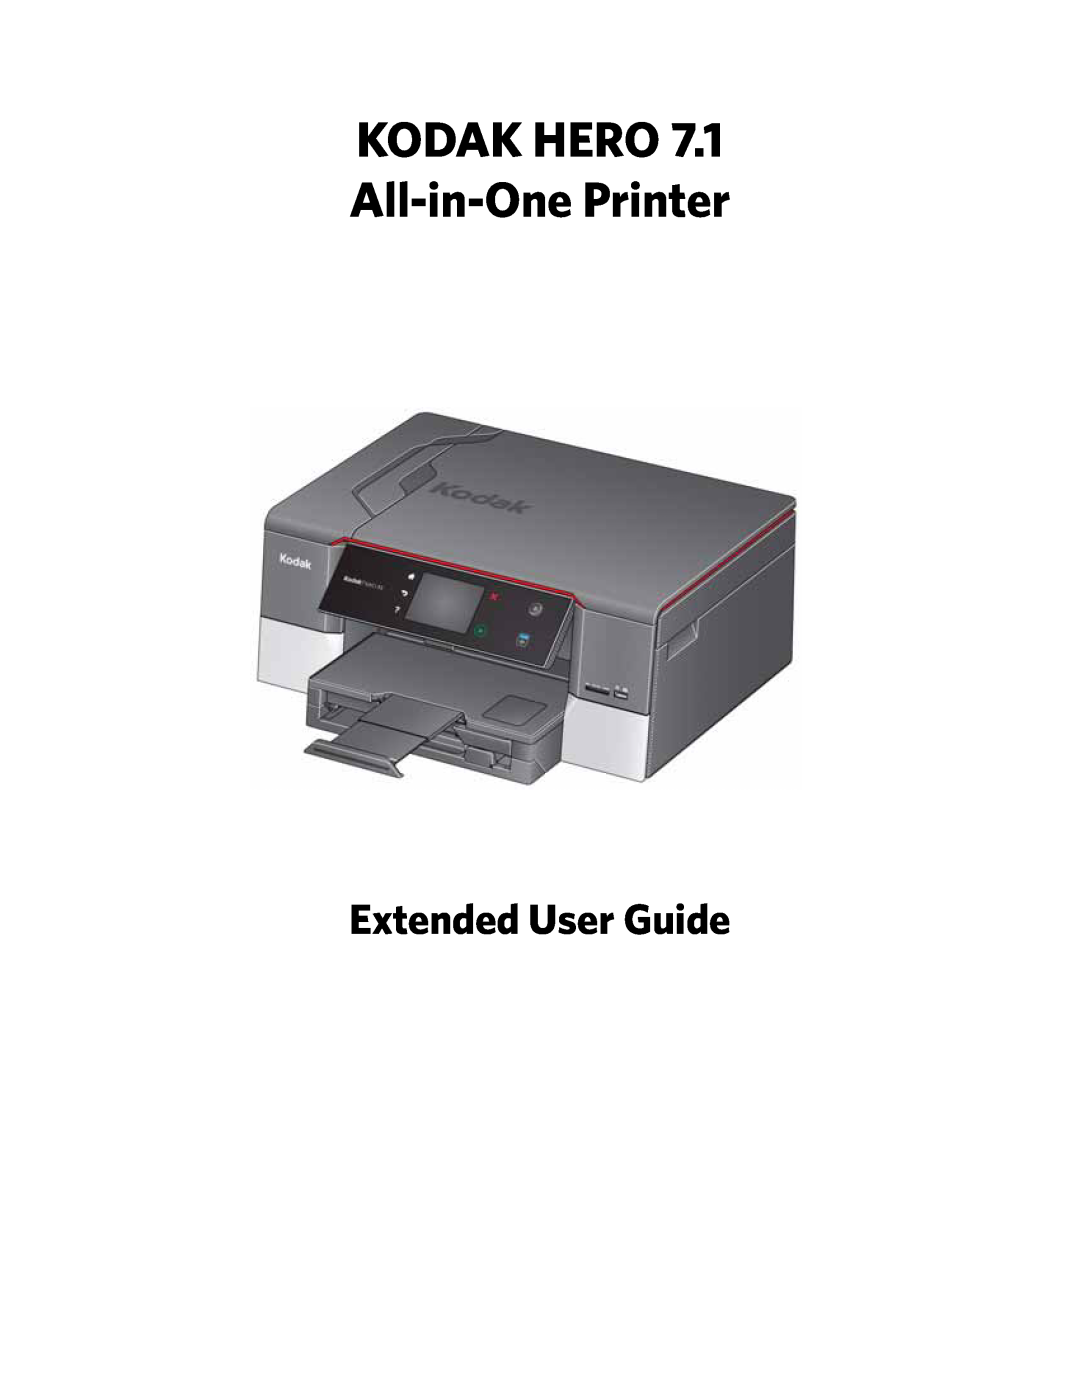 Kodak manual Extended User Guide, KODAK HERO 7.1 All-in-One Printer 